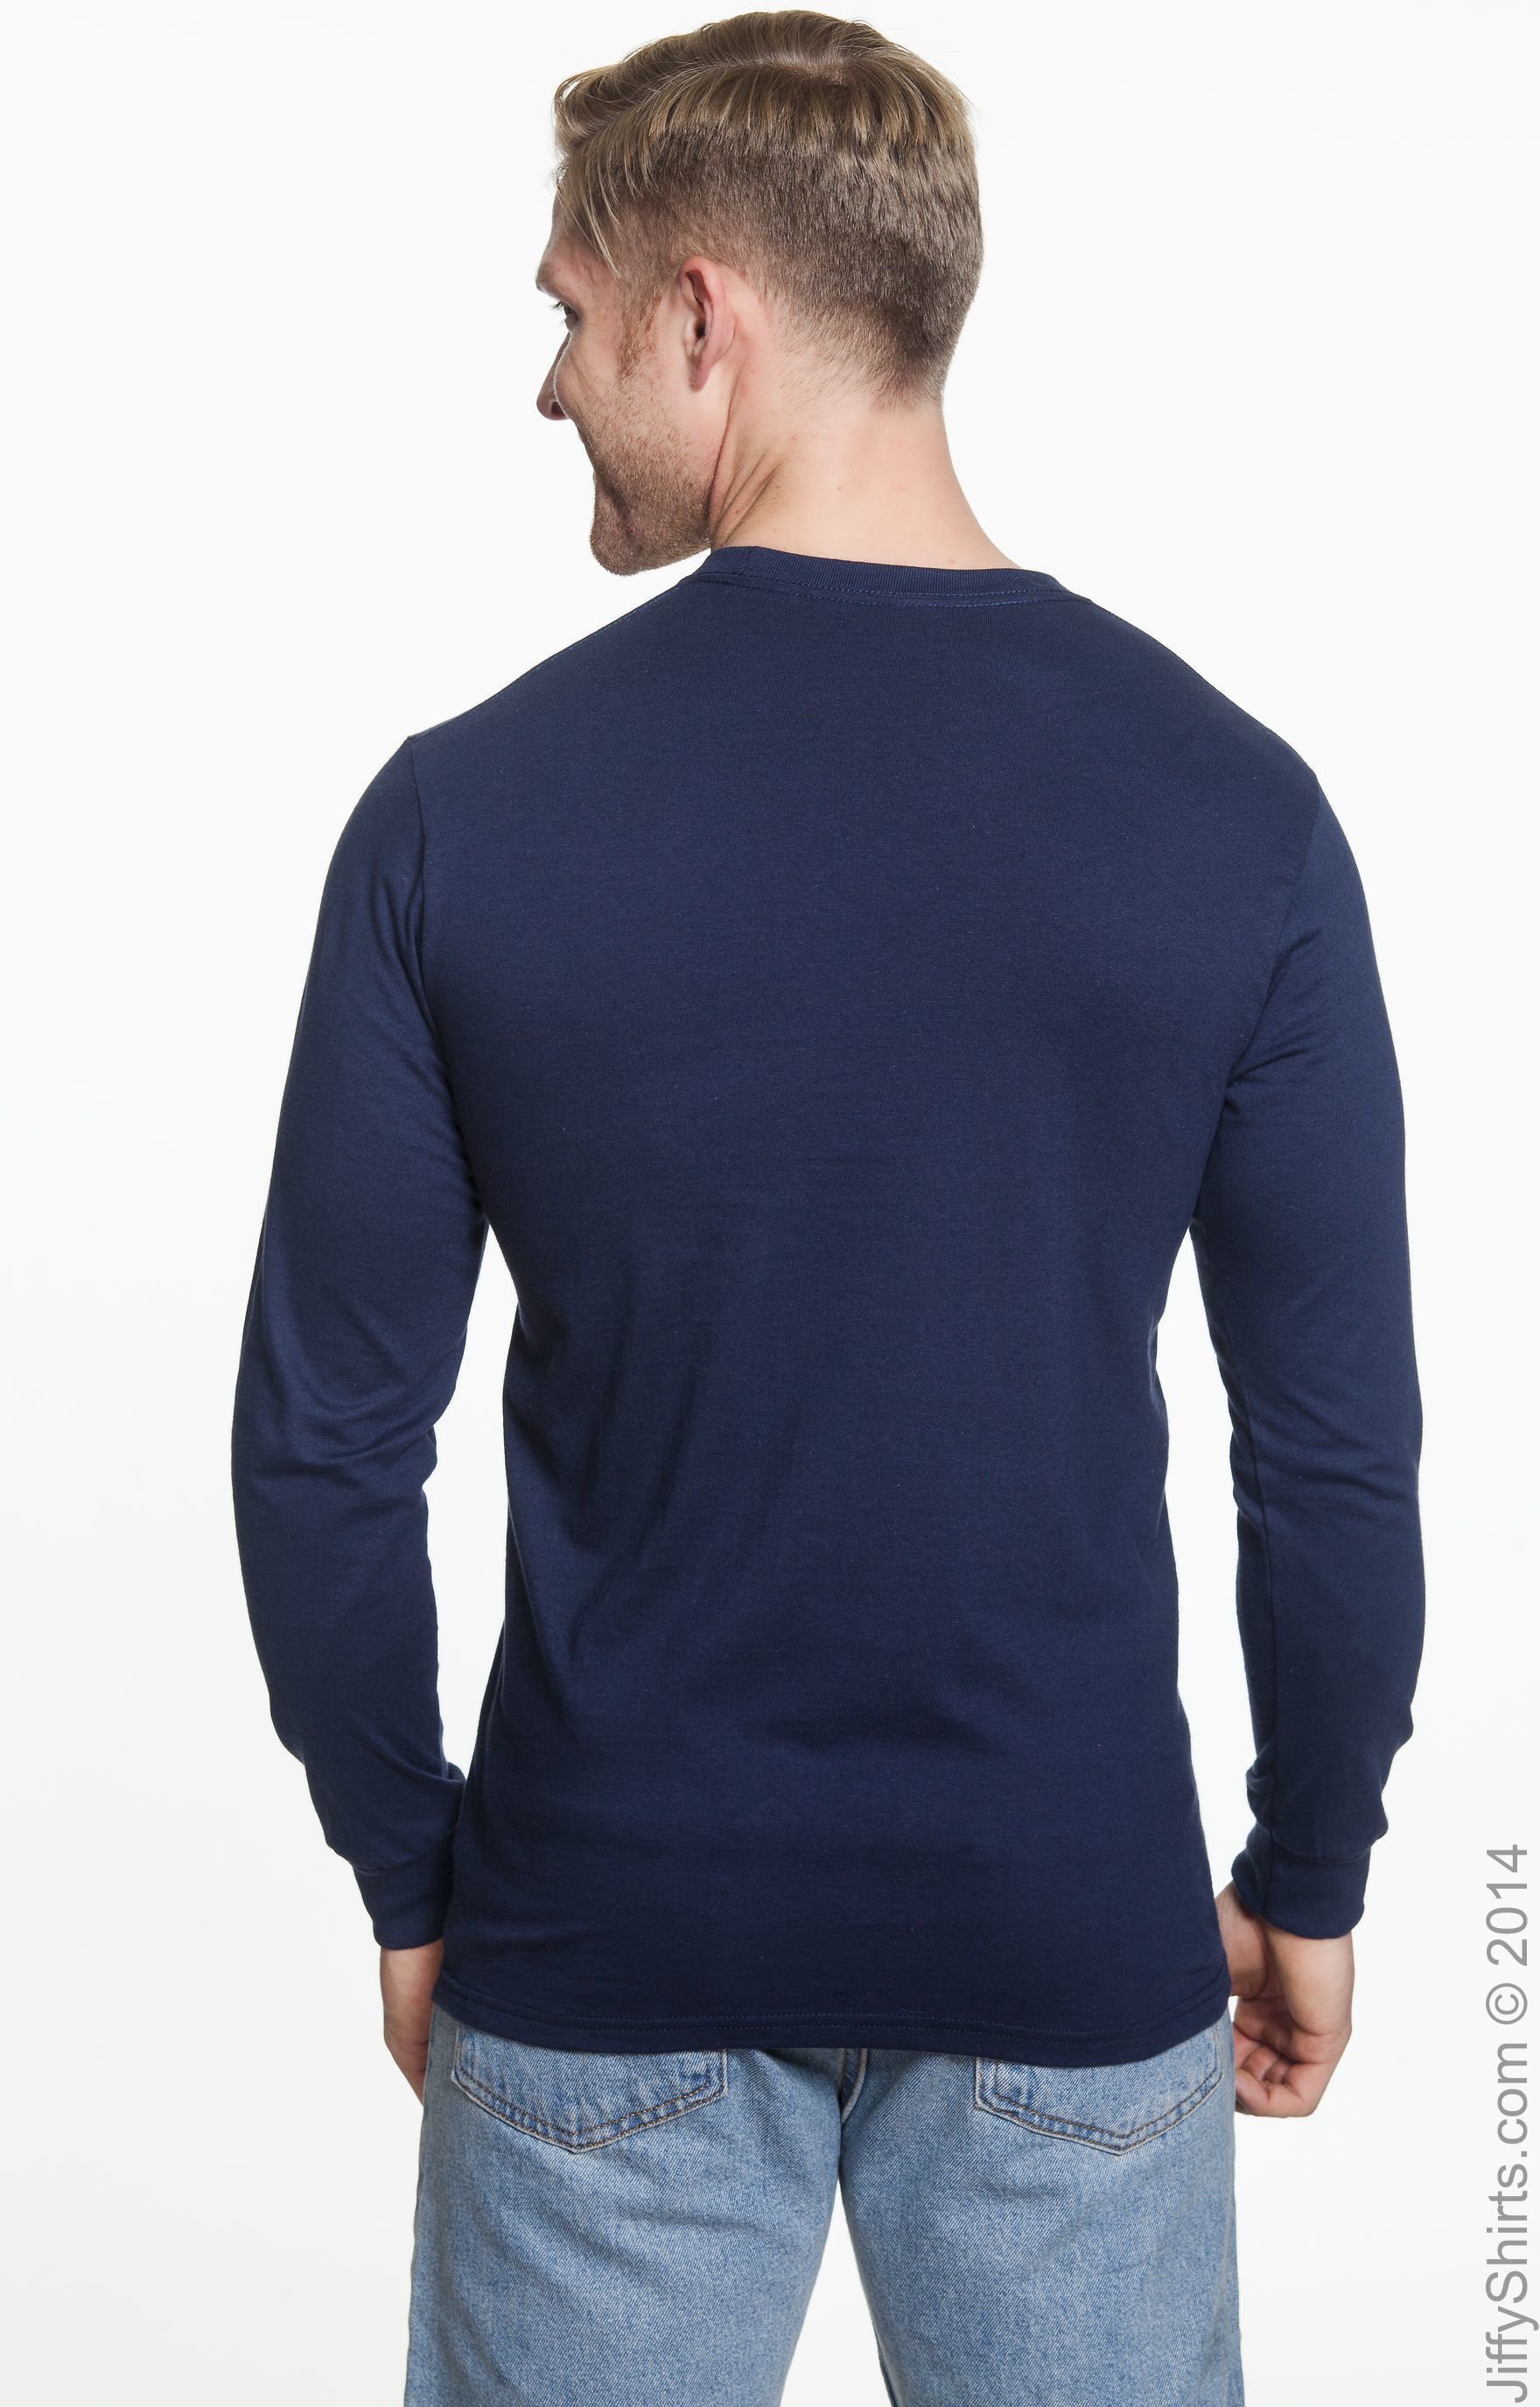 NAVY Anvil Midweight Long-Sleeve T-Shirt